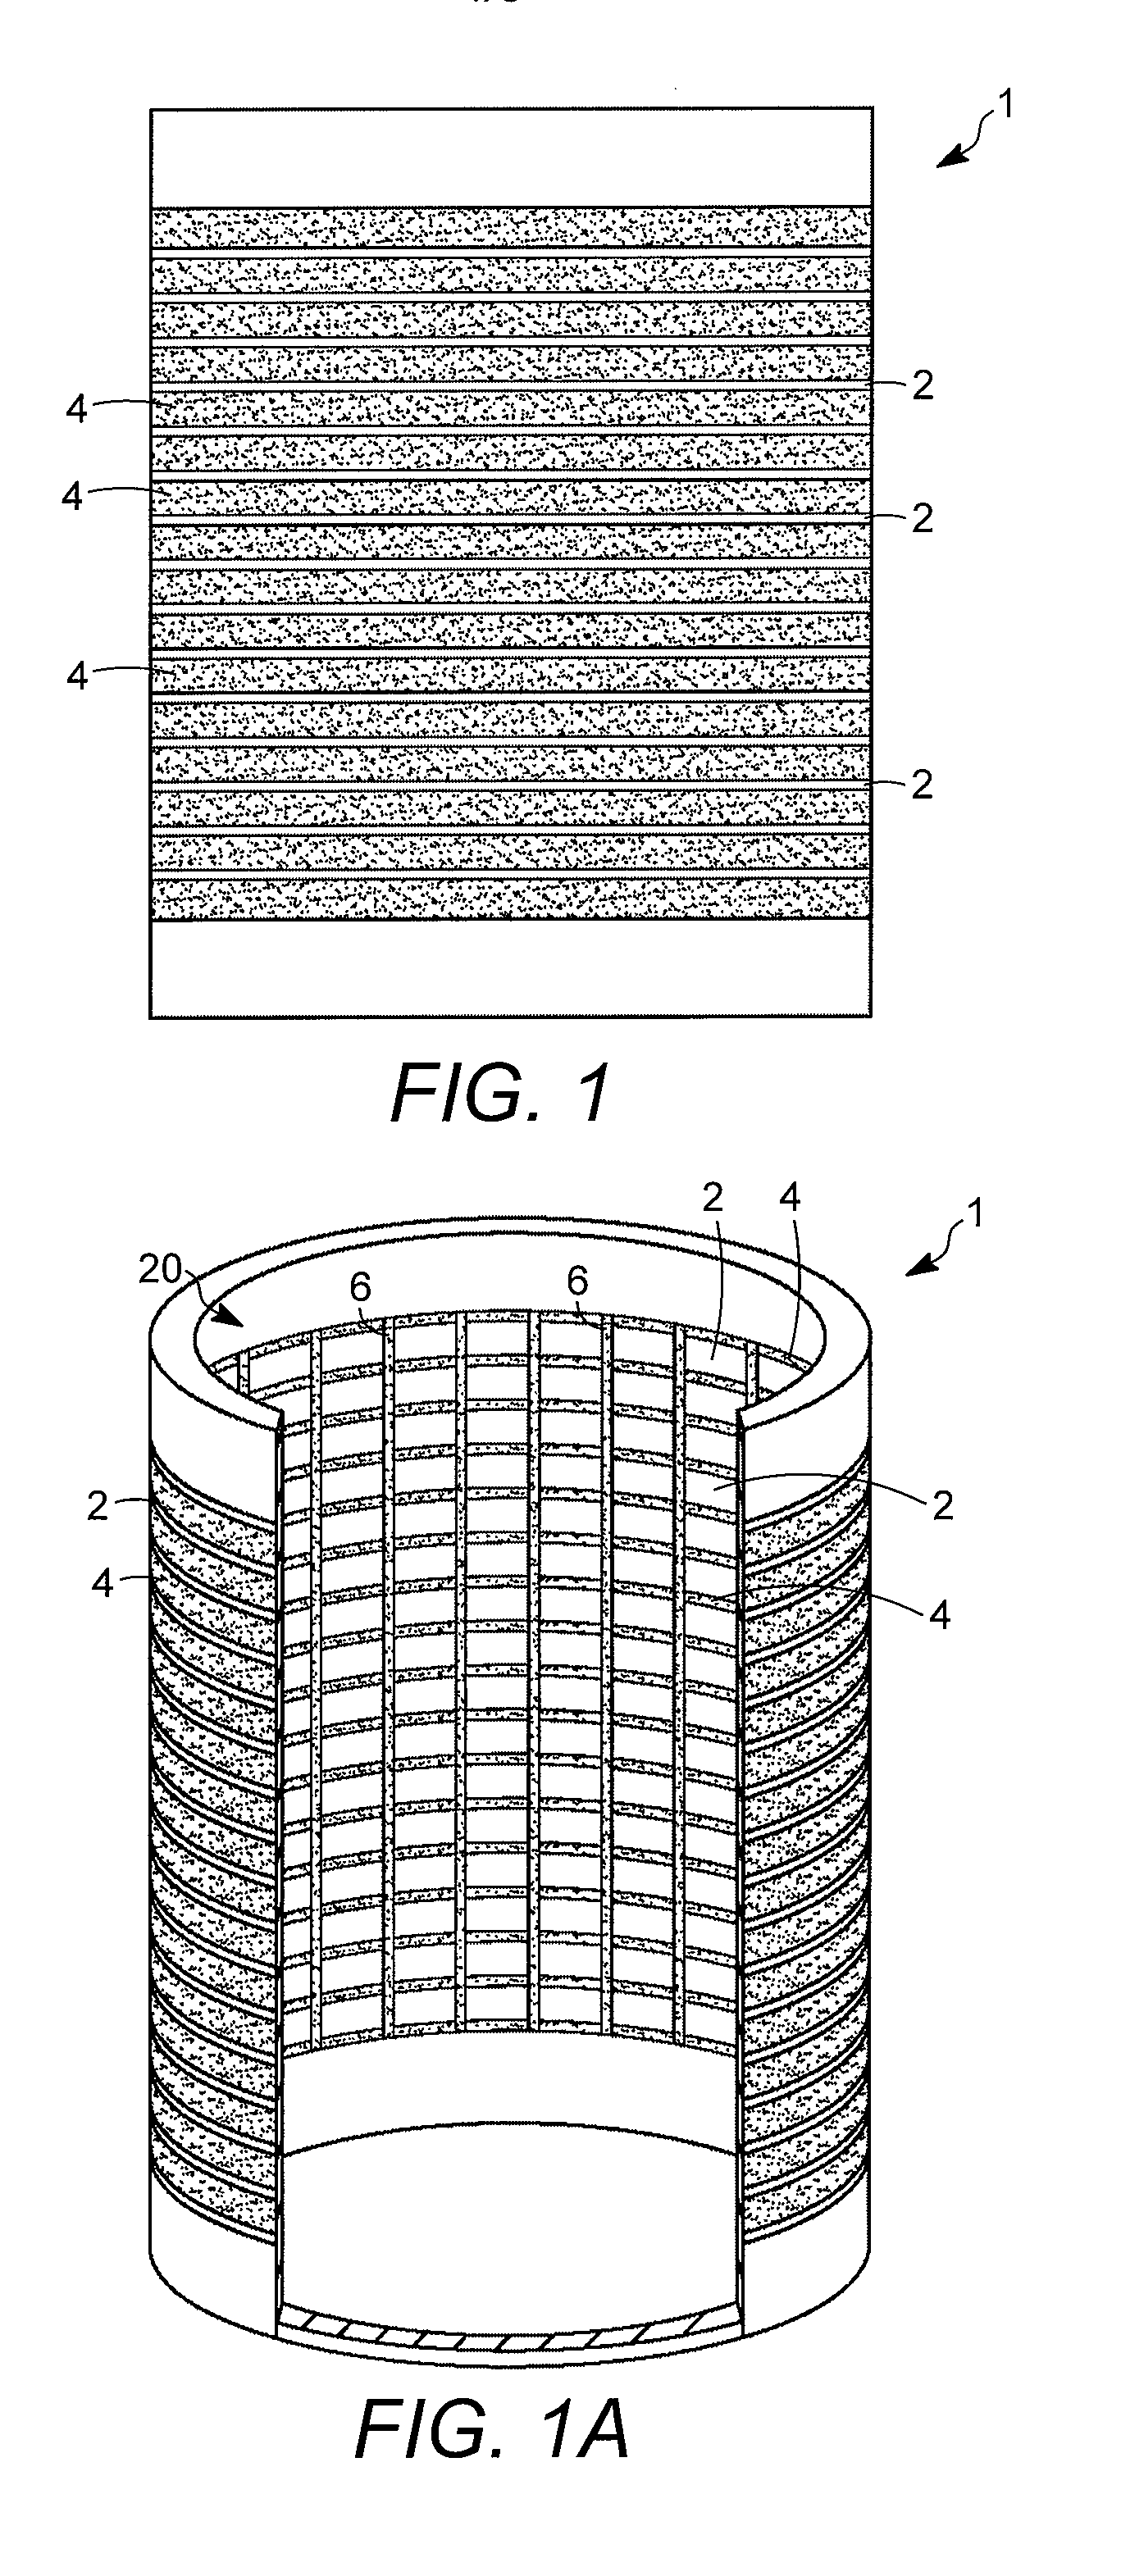 Fluid distribution in radial flow reactors including moving bed reactors